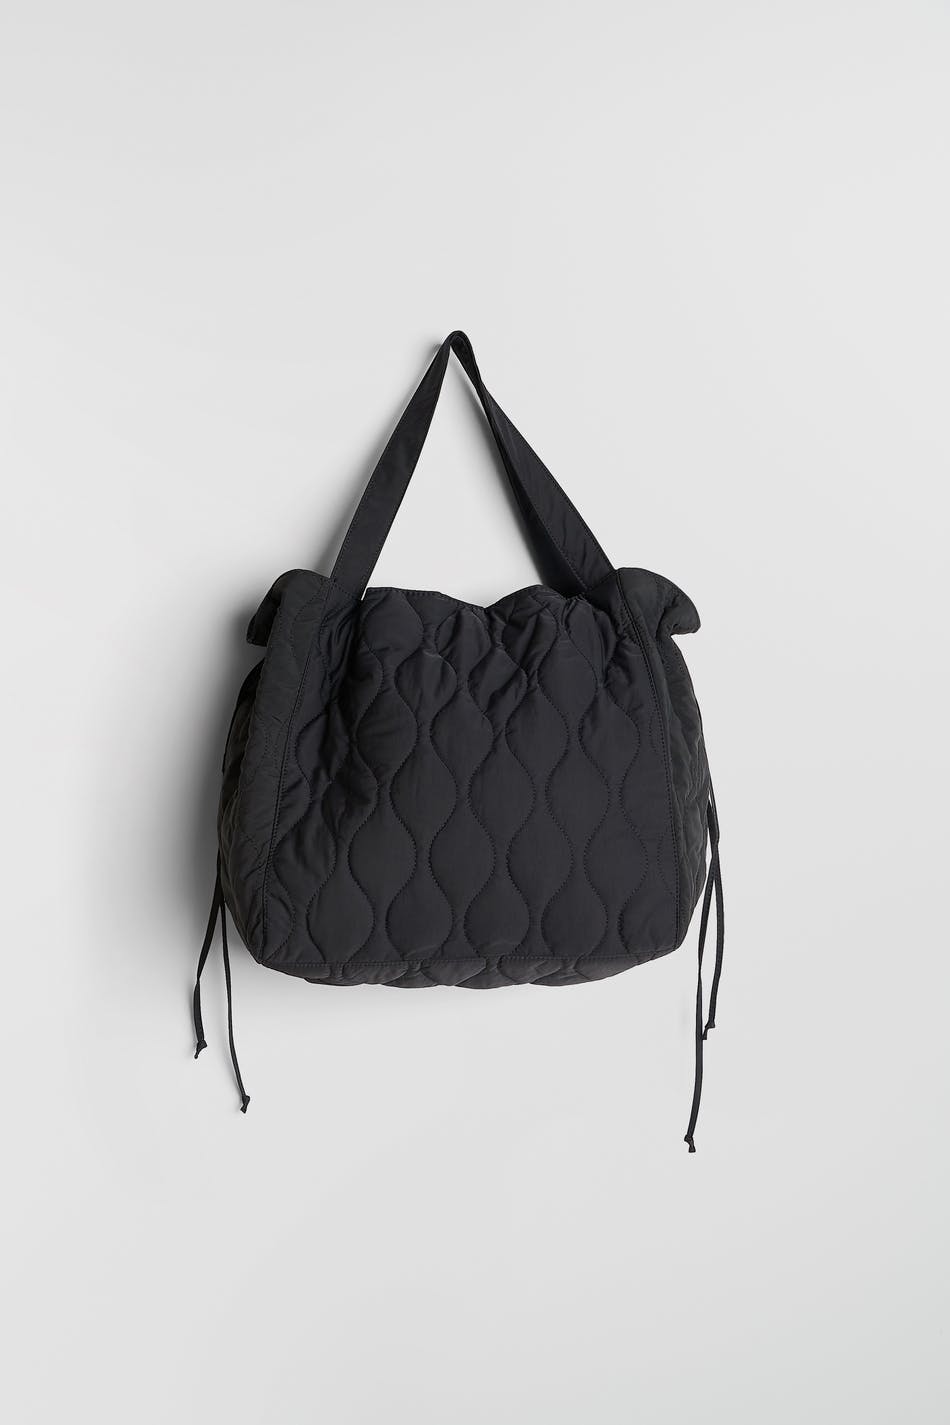 Gina Tricot Lovis bag ONESIZE  Black (9000)